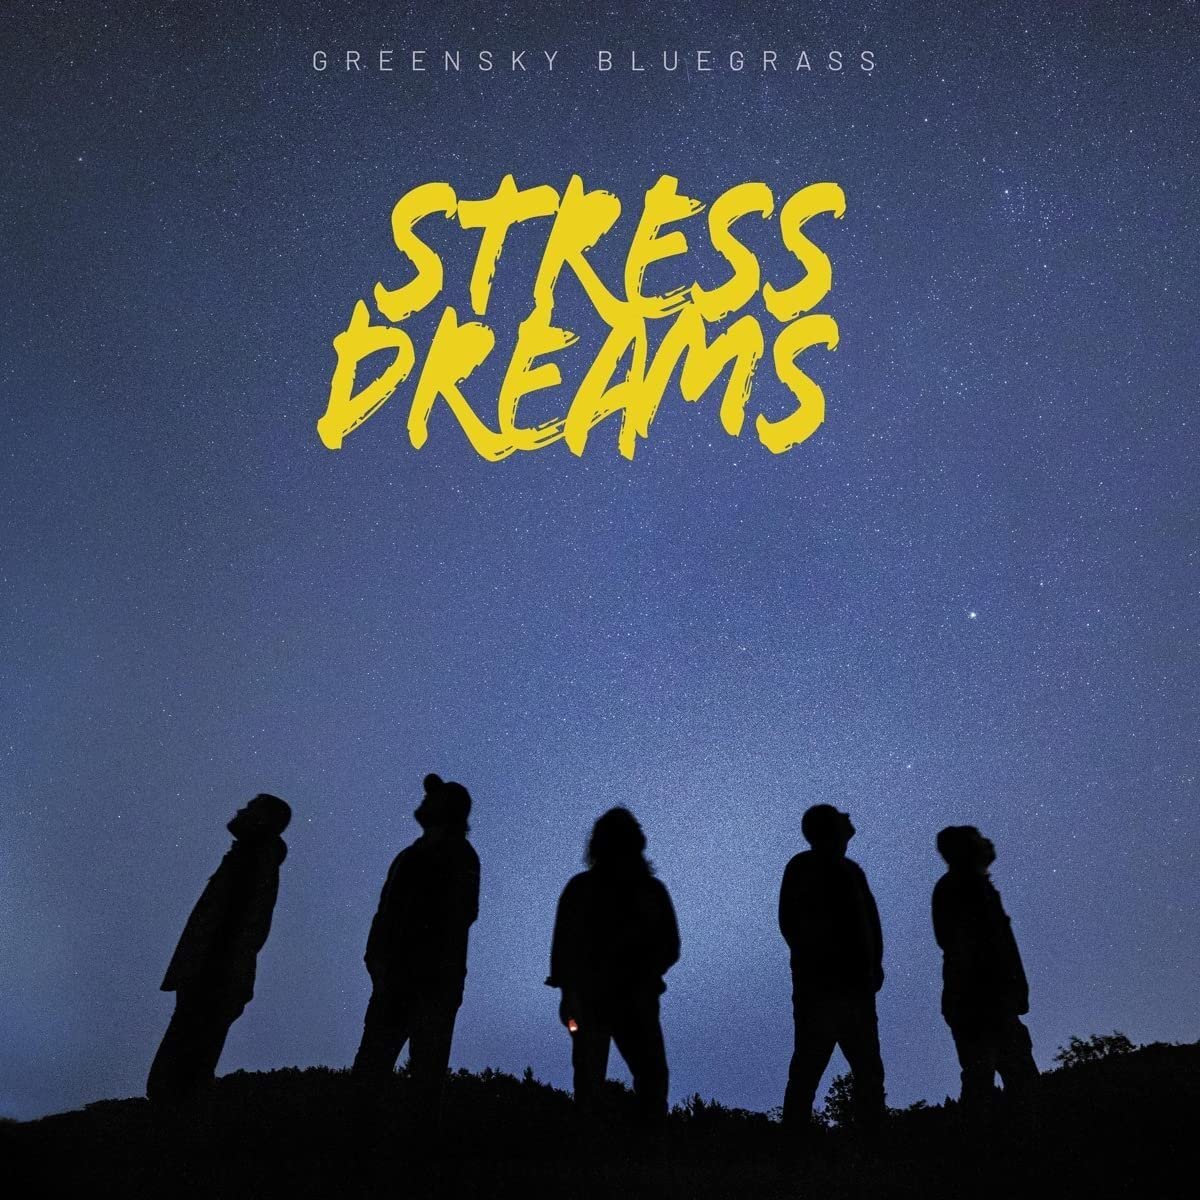 greensky bluegrass - stress dreams.jpg